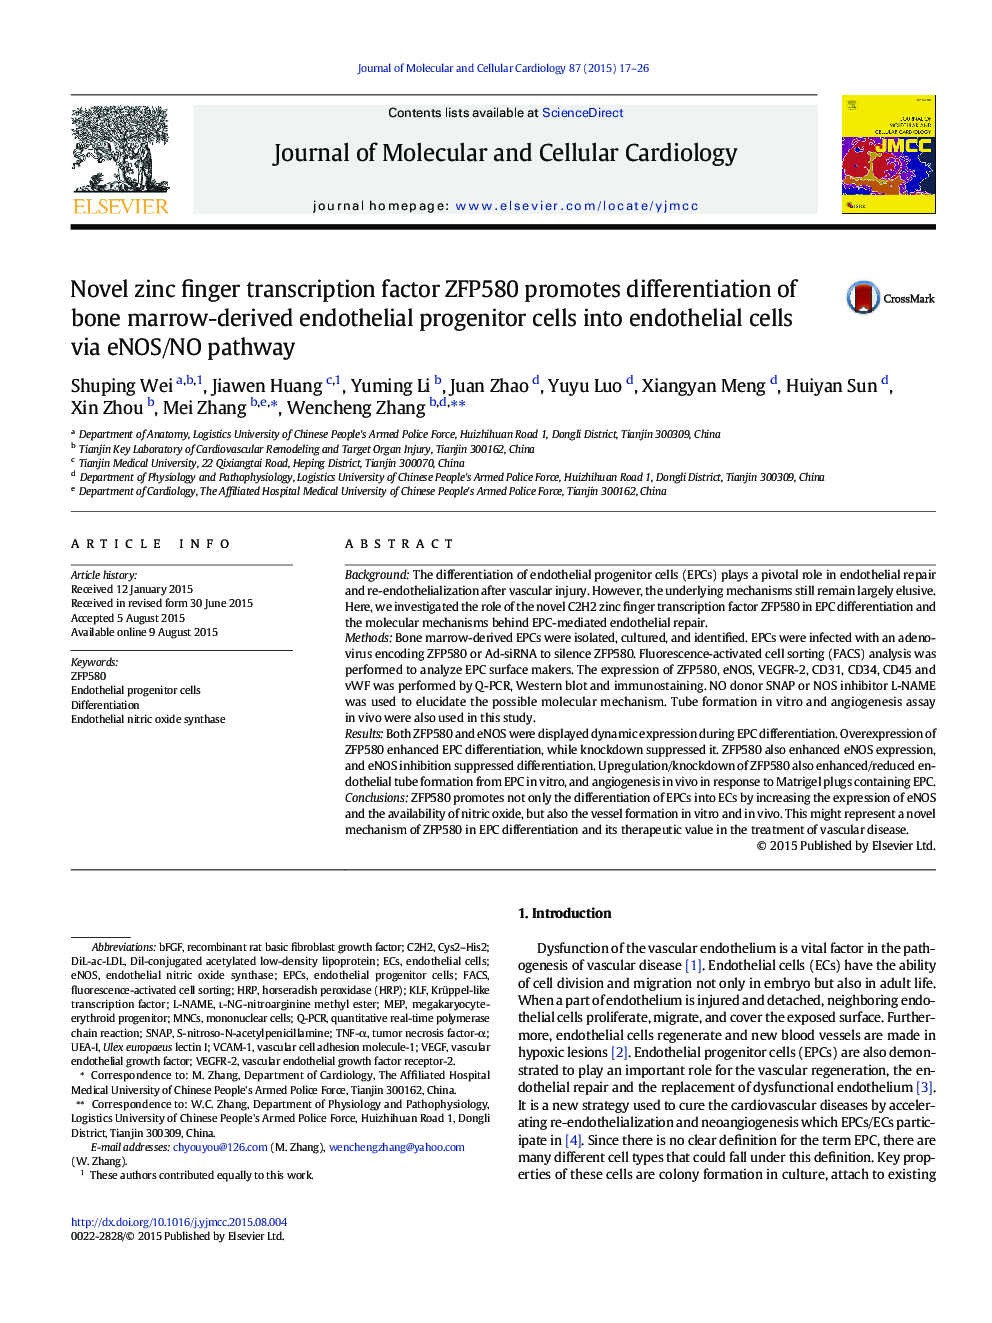 Novel zinc finger transcription factor ZFP580 promotes differentiation of bone marrow-derived endothelial progenitor cells into endothelial cells via eNOS/NO pathway